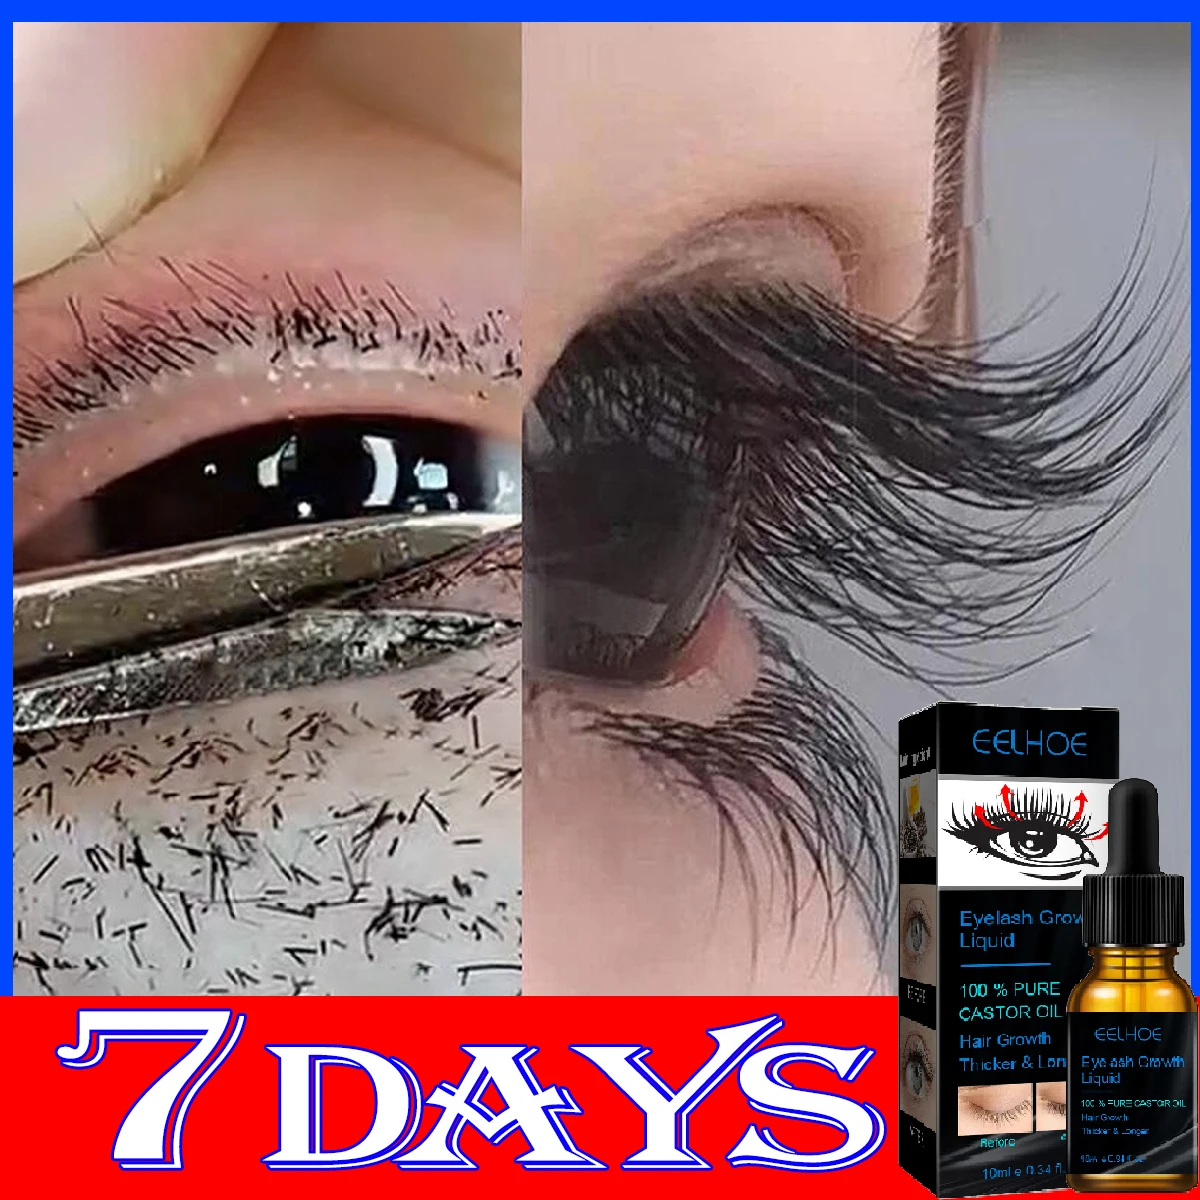 7Days Fast Eyelash Growth Serum Eyebrow Enhancer Products Longer Fuller Thicker Lashes Eyelashes Enhancer Care For Men Women